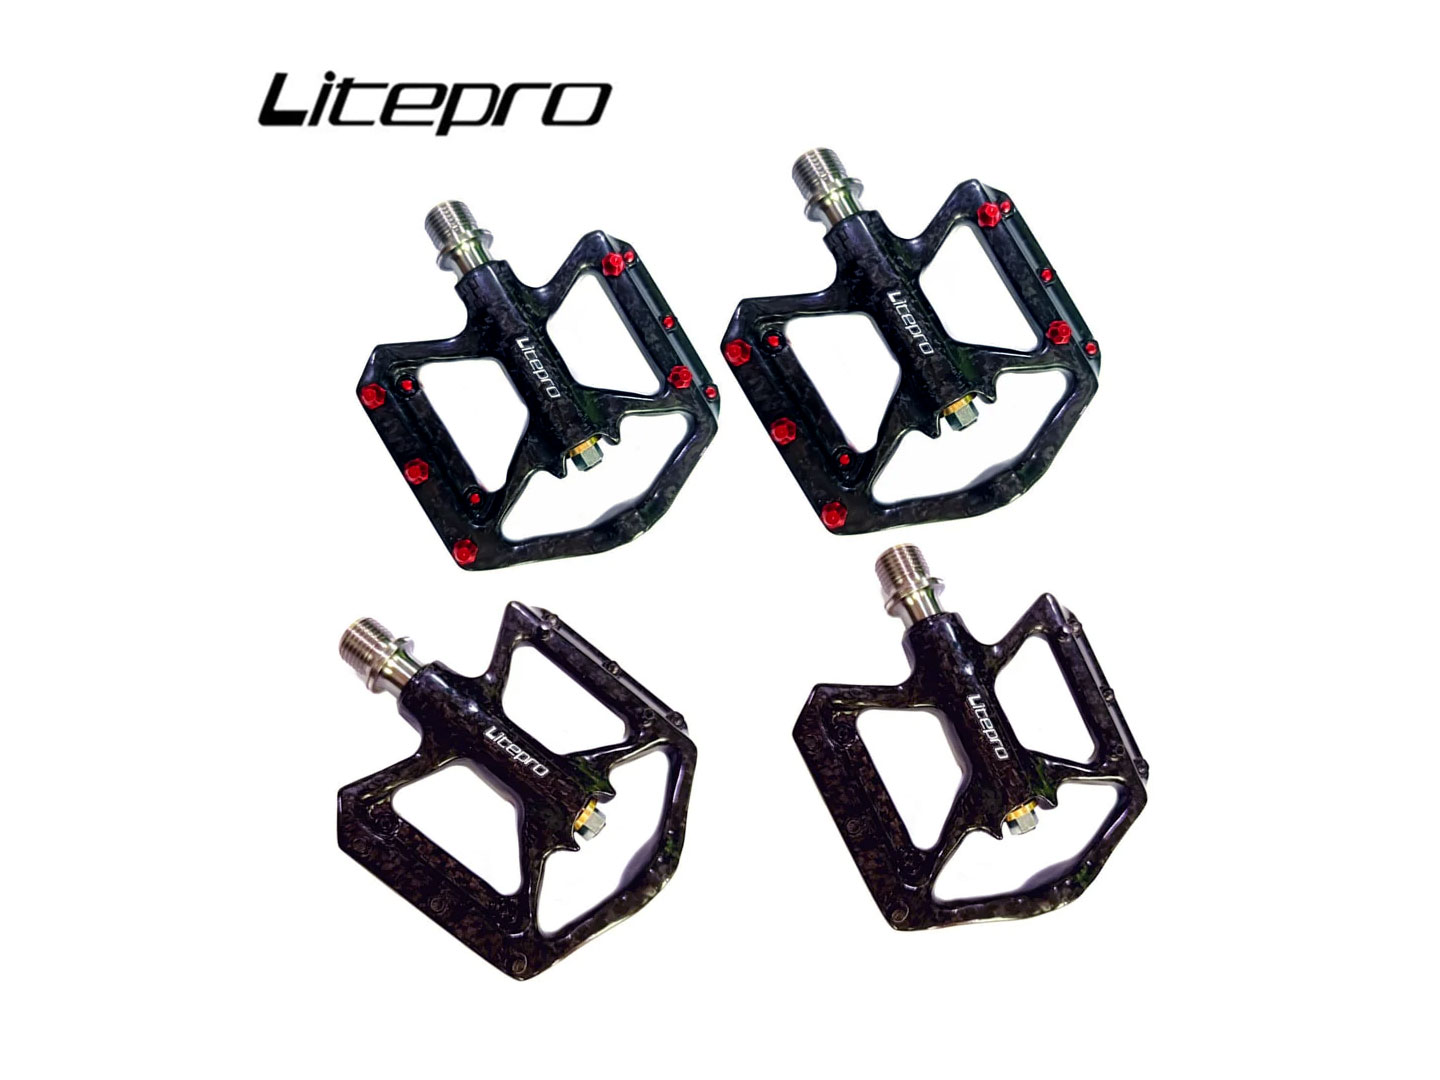 Litepro S5C Carbon Platform Titanium Axle Bearing Pedals 178g